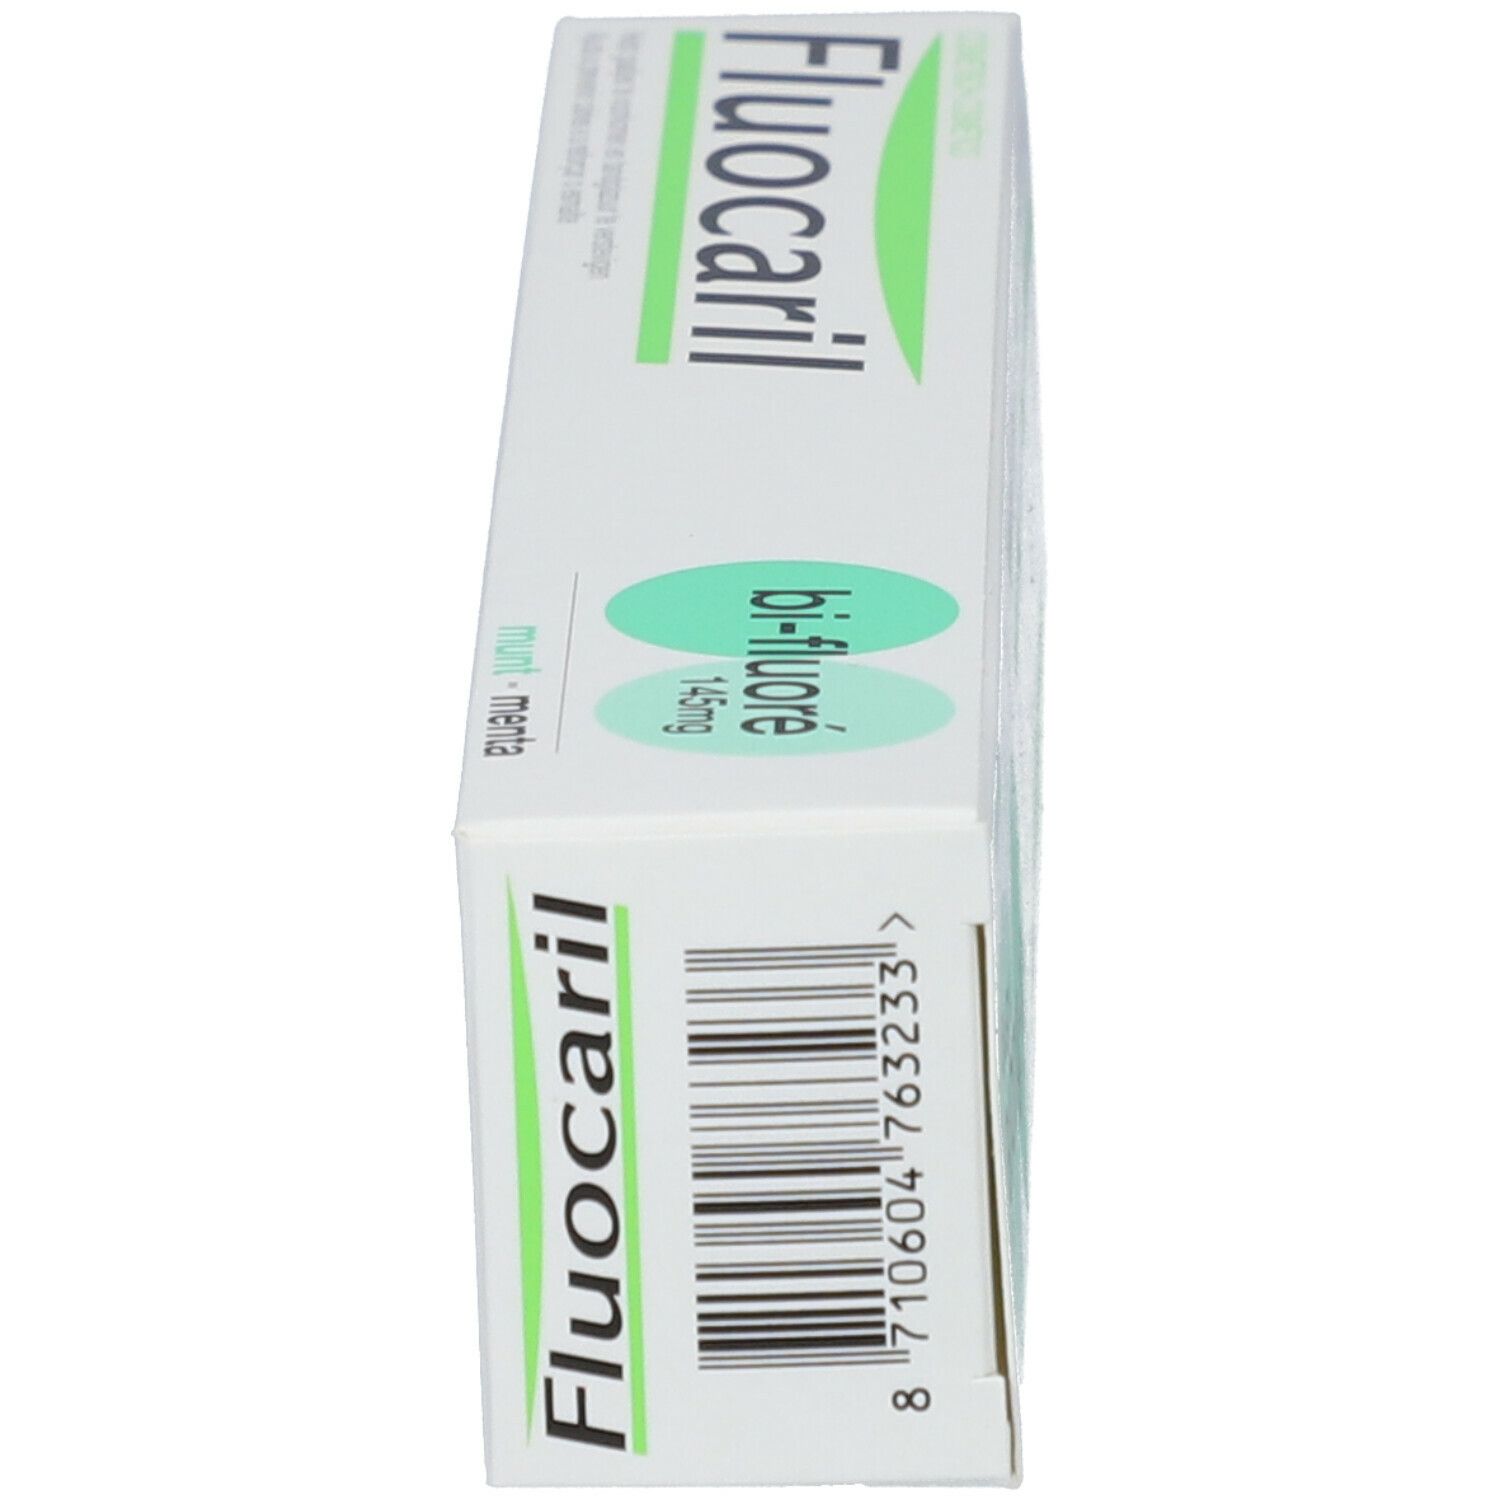 Fluocaril Bi-Fluorescent 145 Zahnpasta Mint